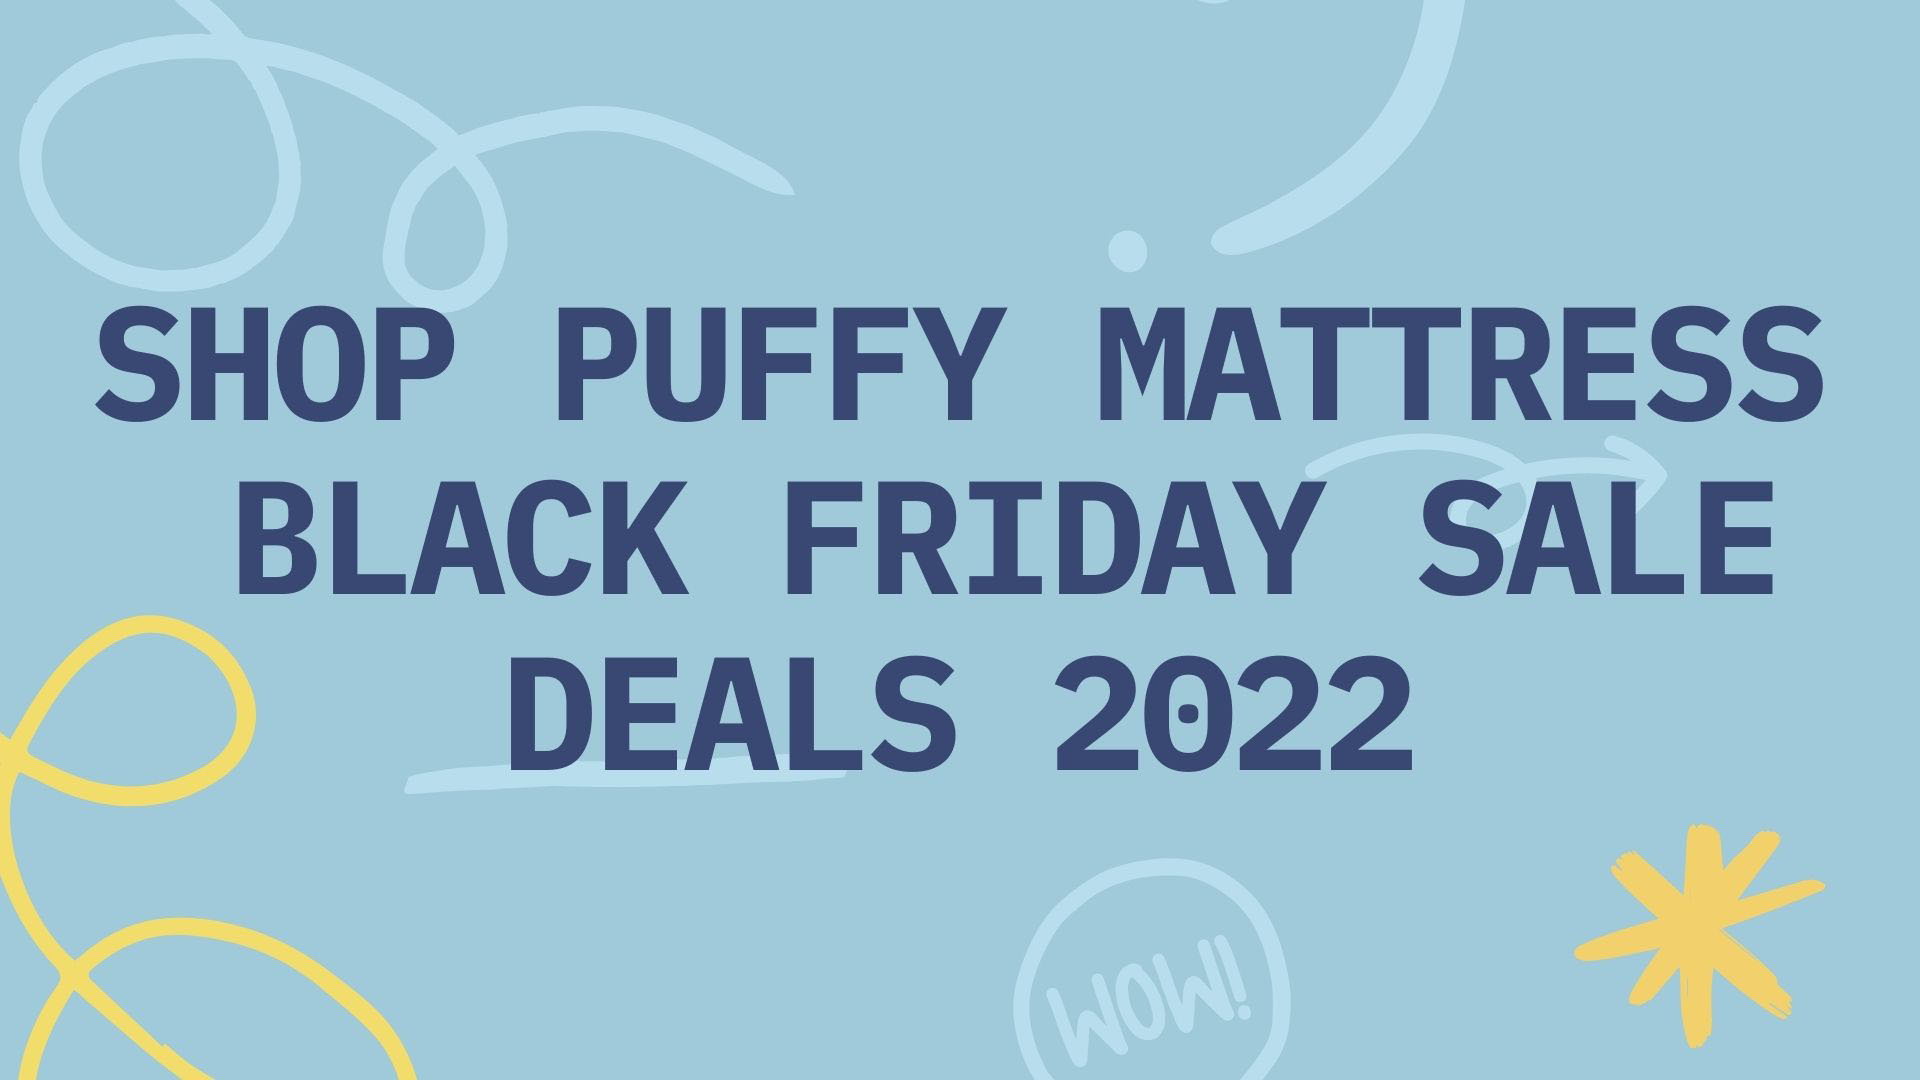 Puffy Mattress Black Friday Sale Deals (2022)